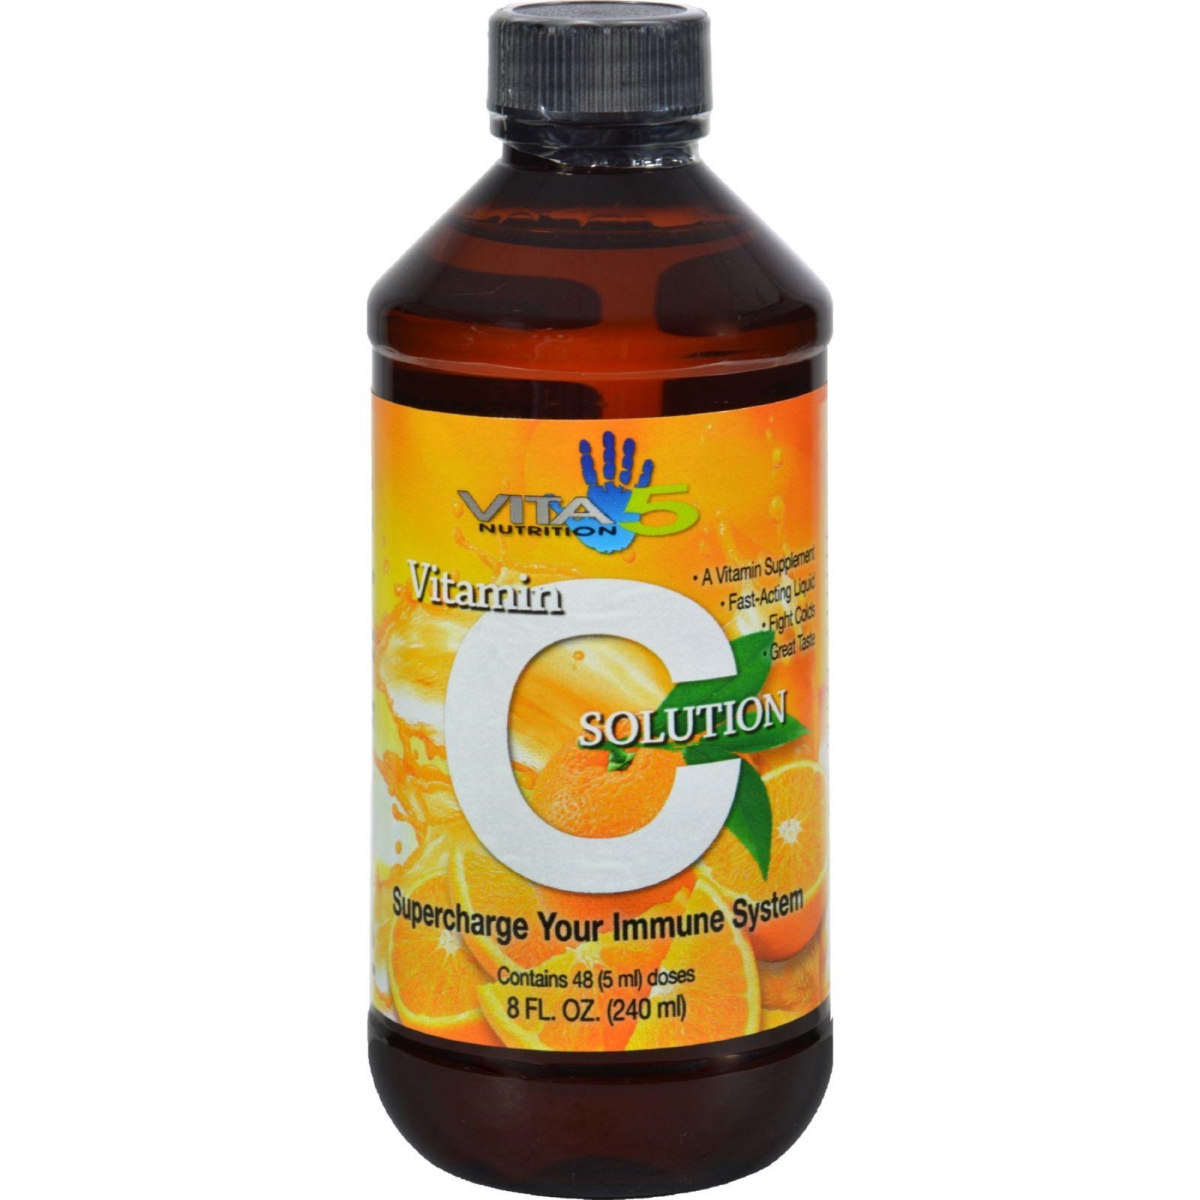 Hg0524215 8 Oz Vitamin C Solution